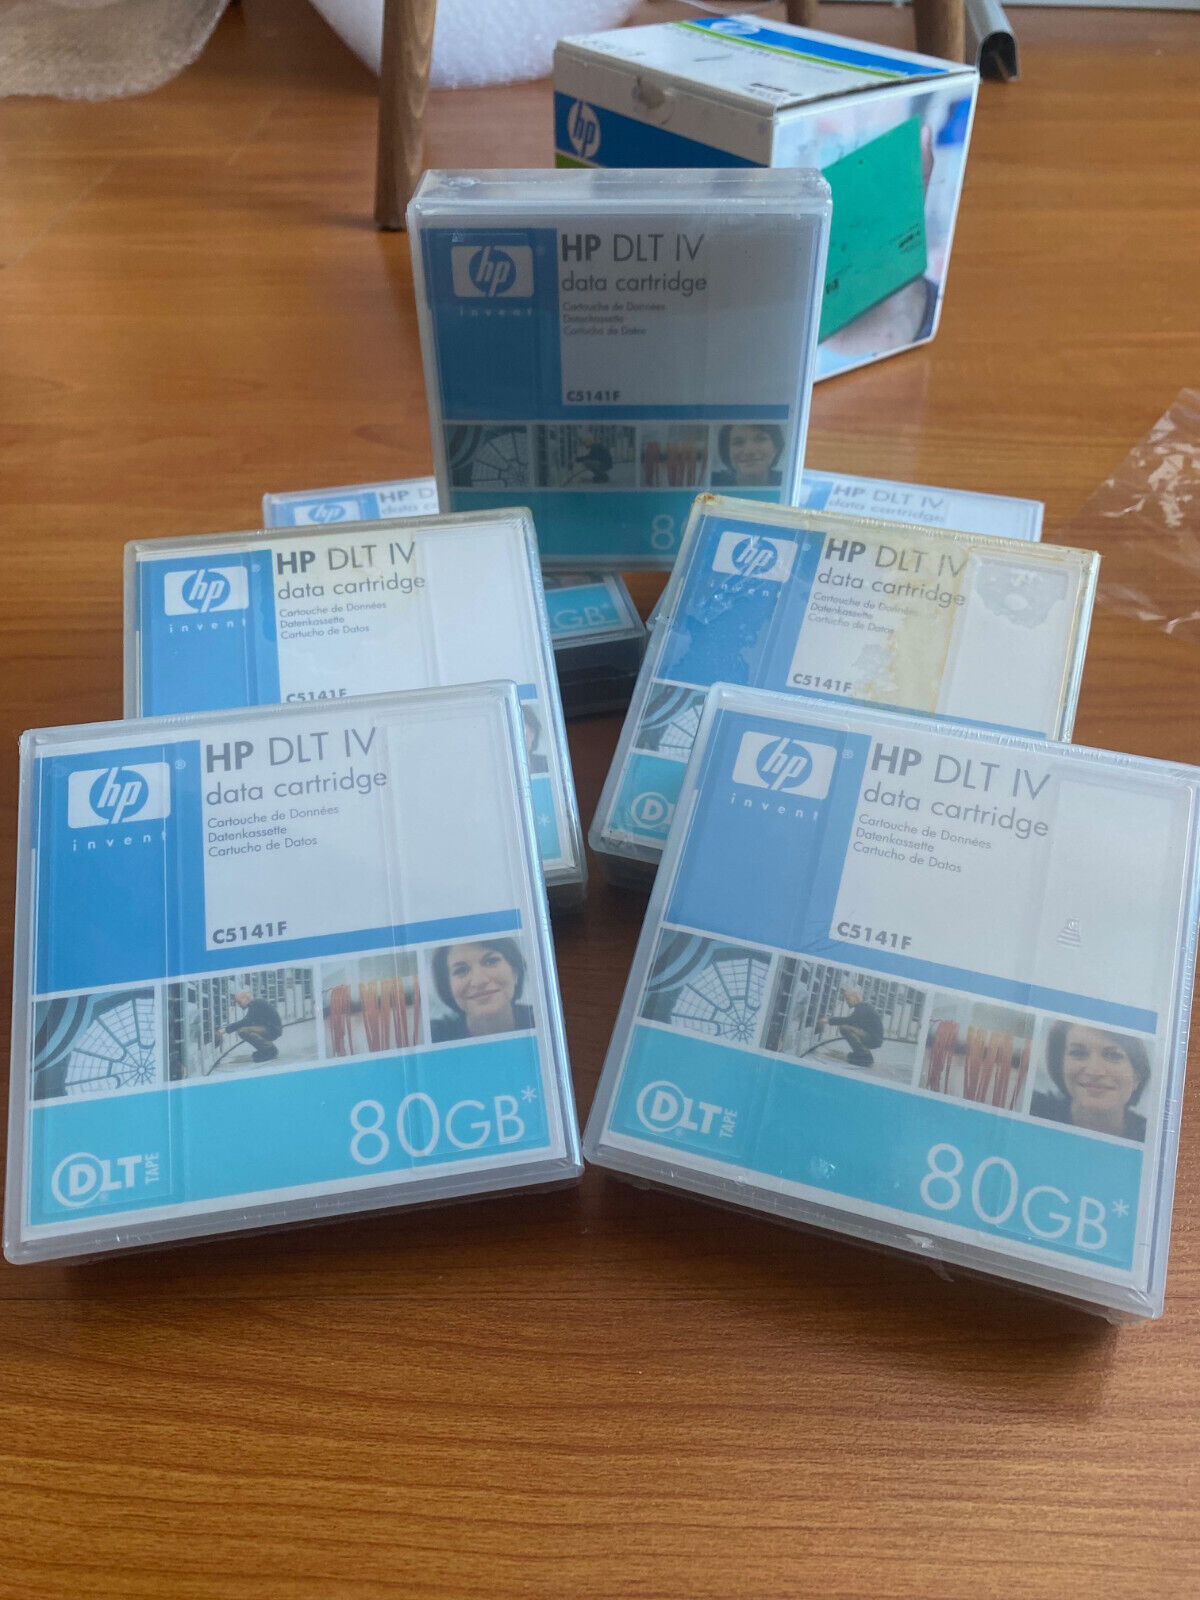 Lot of 8 HP DLT IV Tape Cartridges 80GB C5141F (factory sealed)